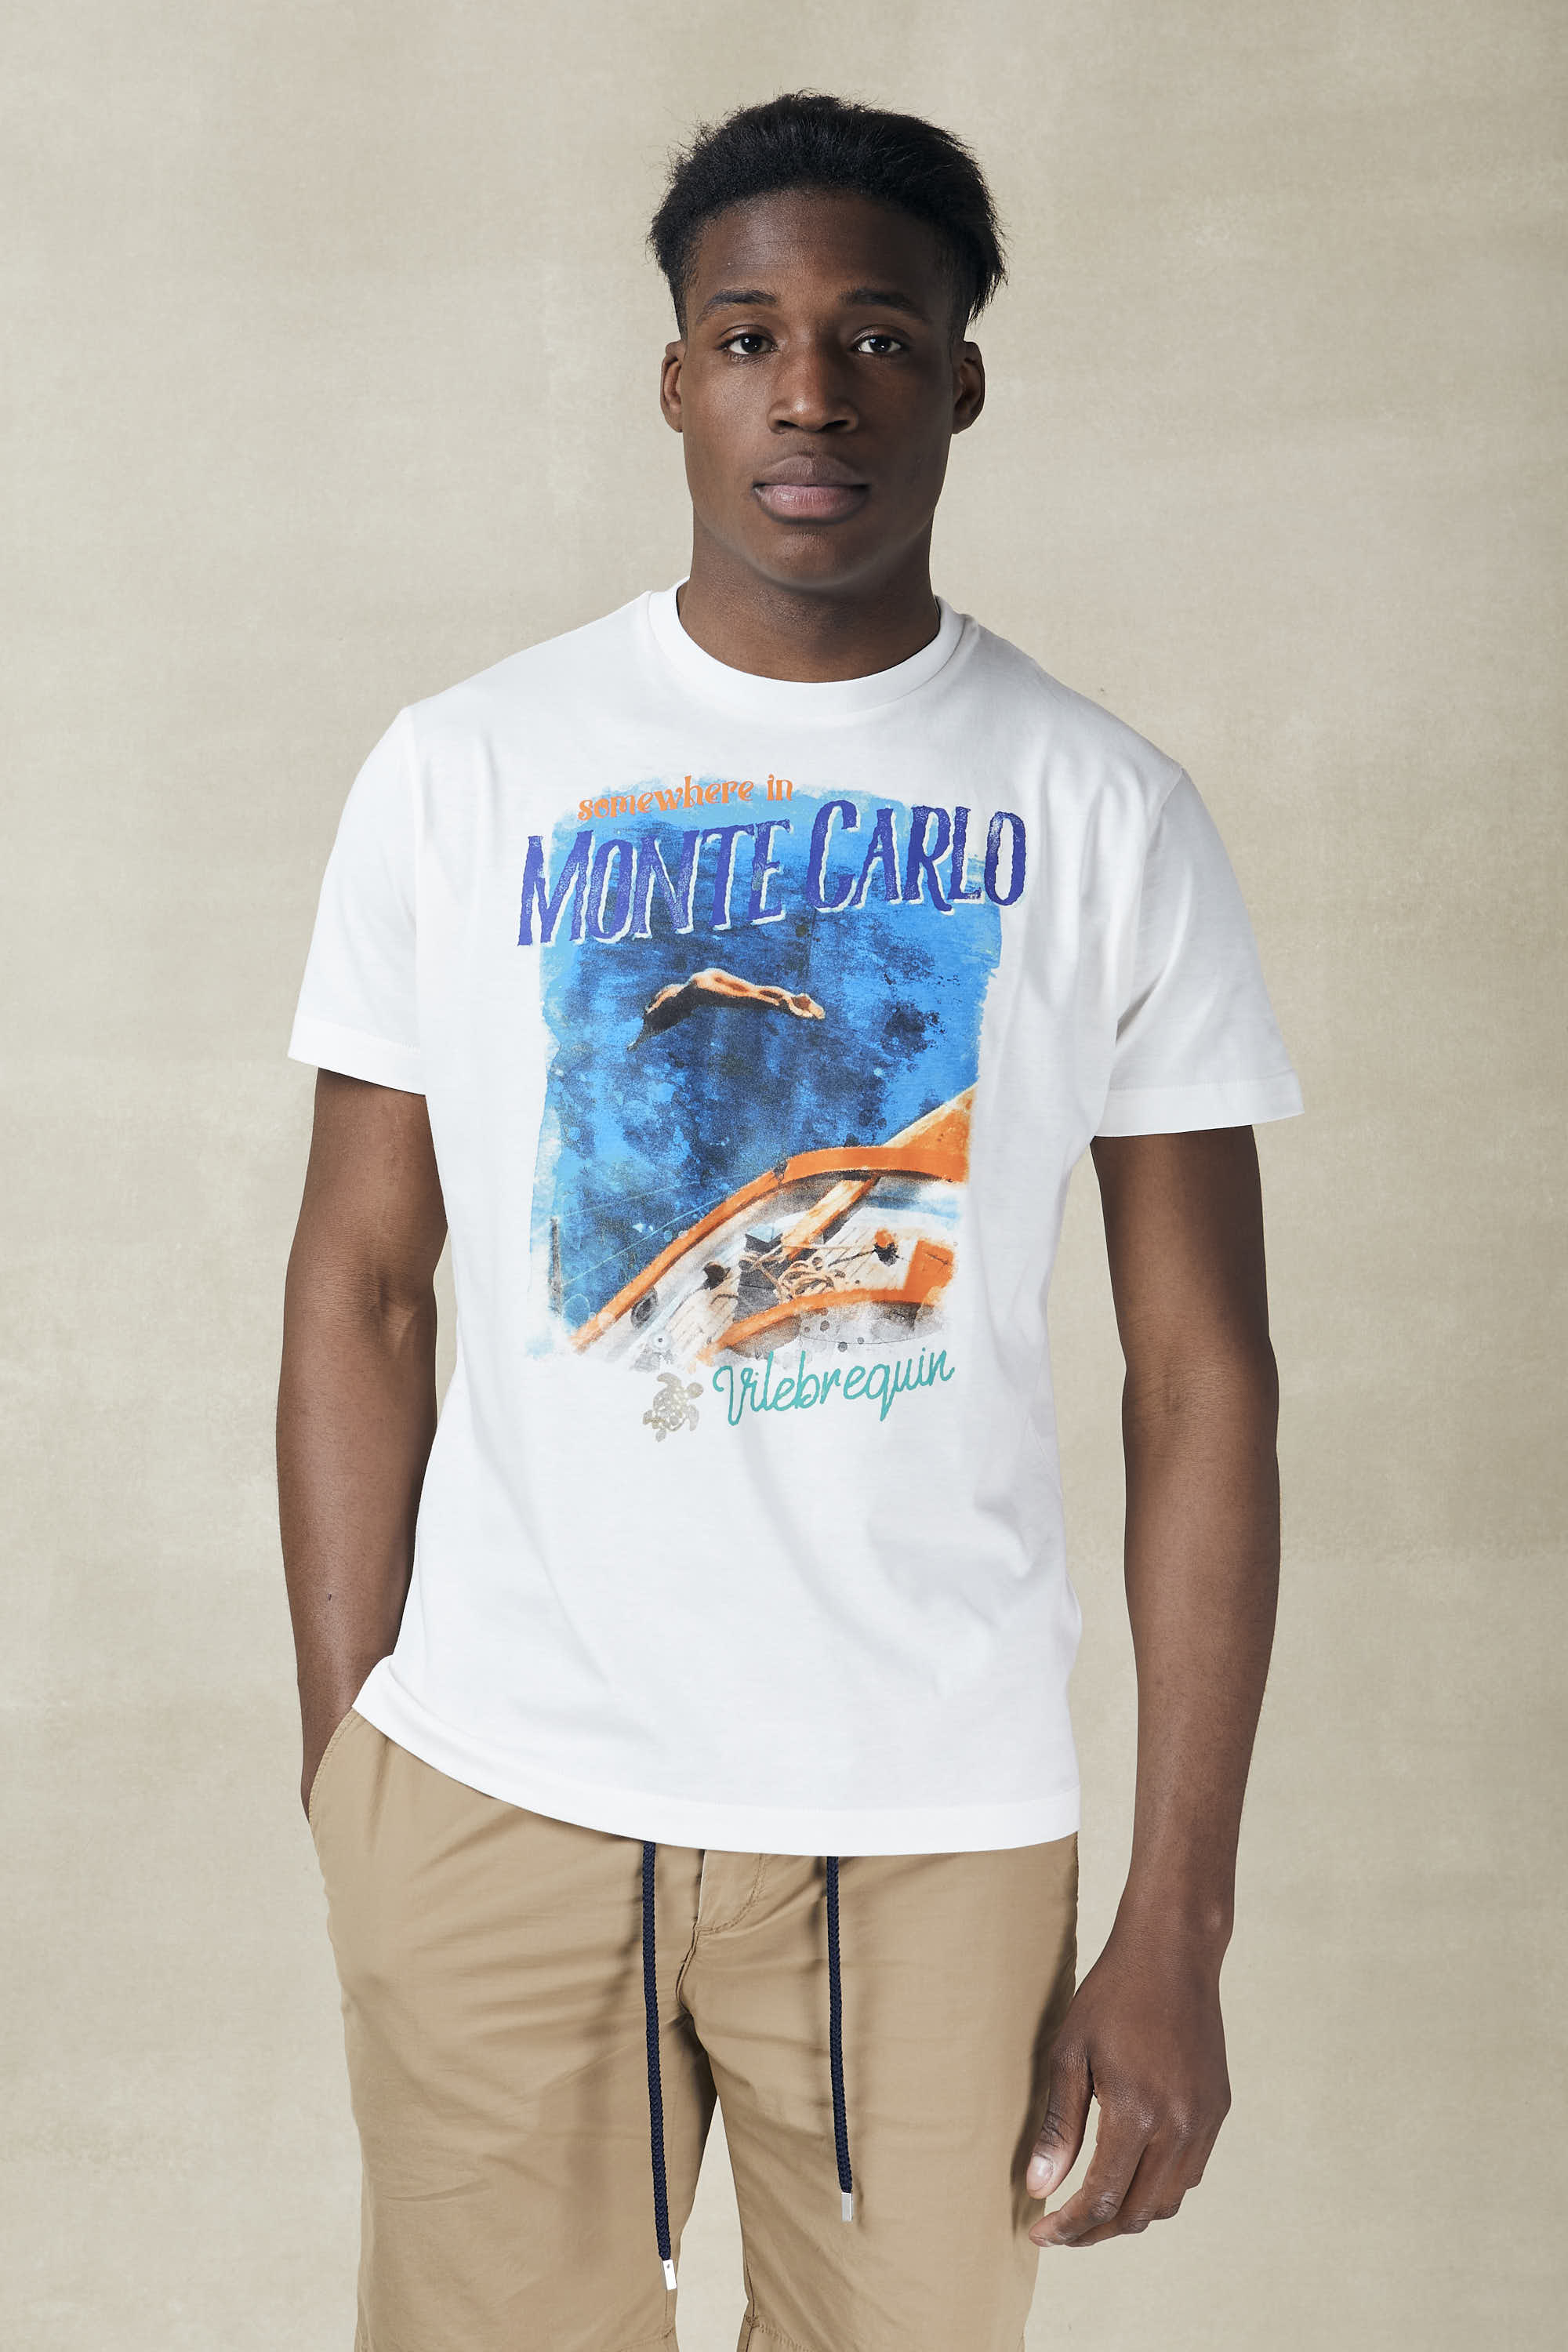 Monte Carlo cotton t-shirt - 2